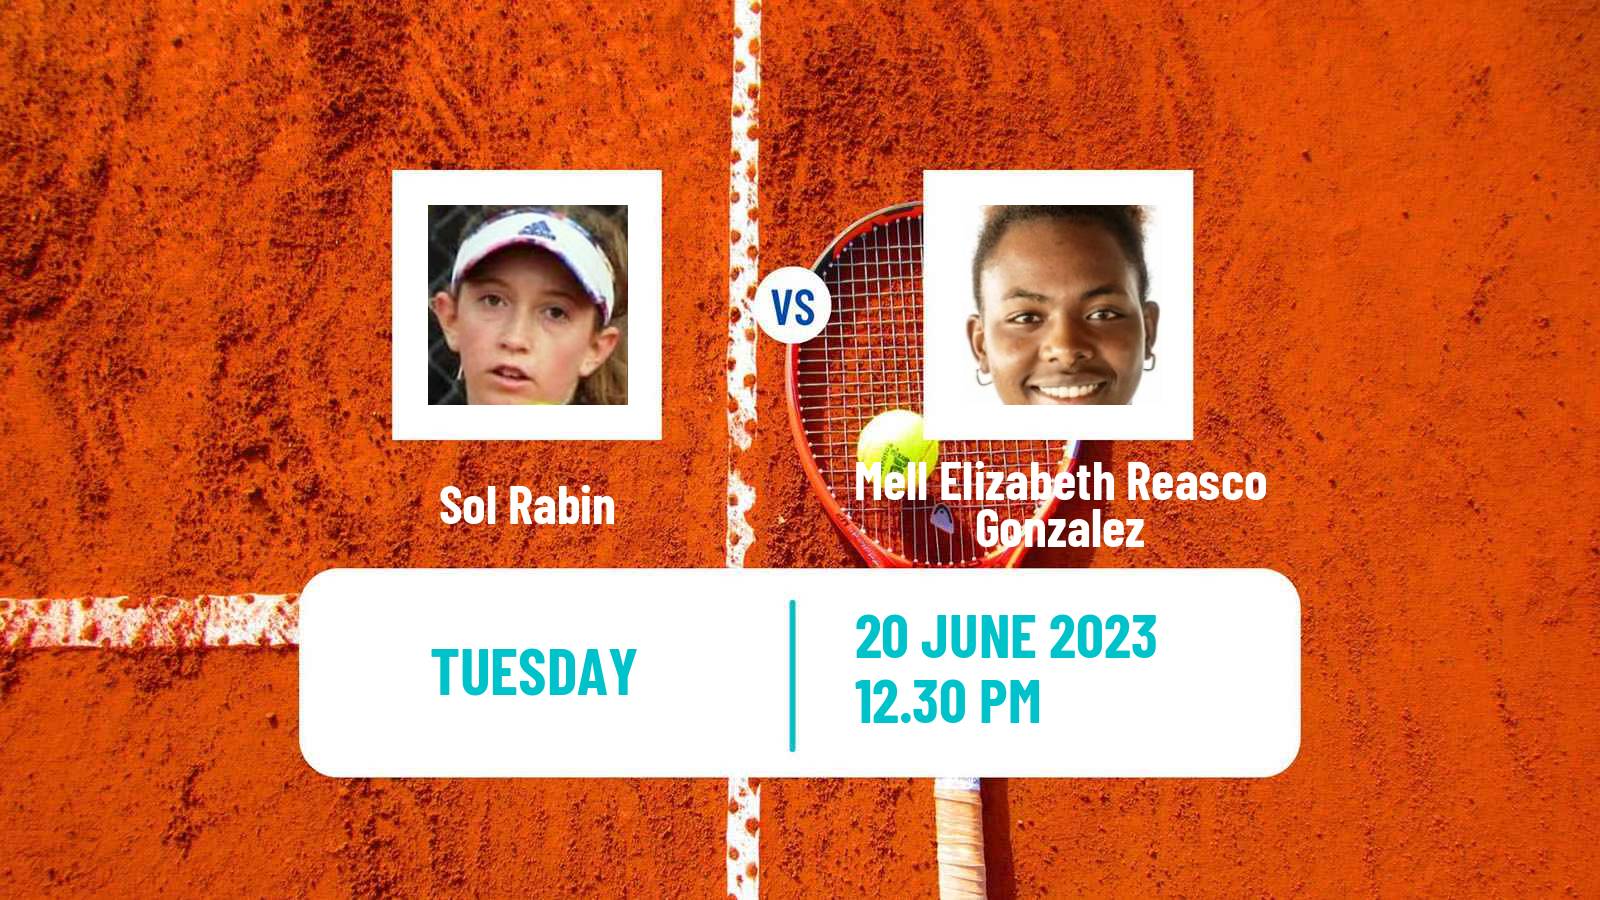 Tennis ITF W15 Buenos Aires Women Sol Rabin - Mell Elizabeth Reasco Gonzalez